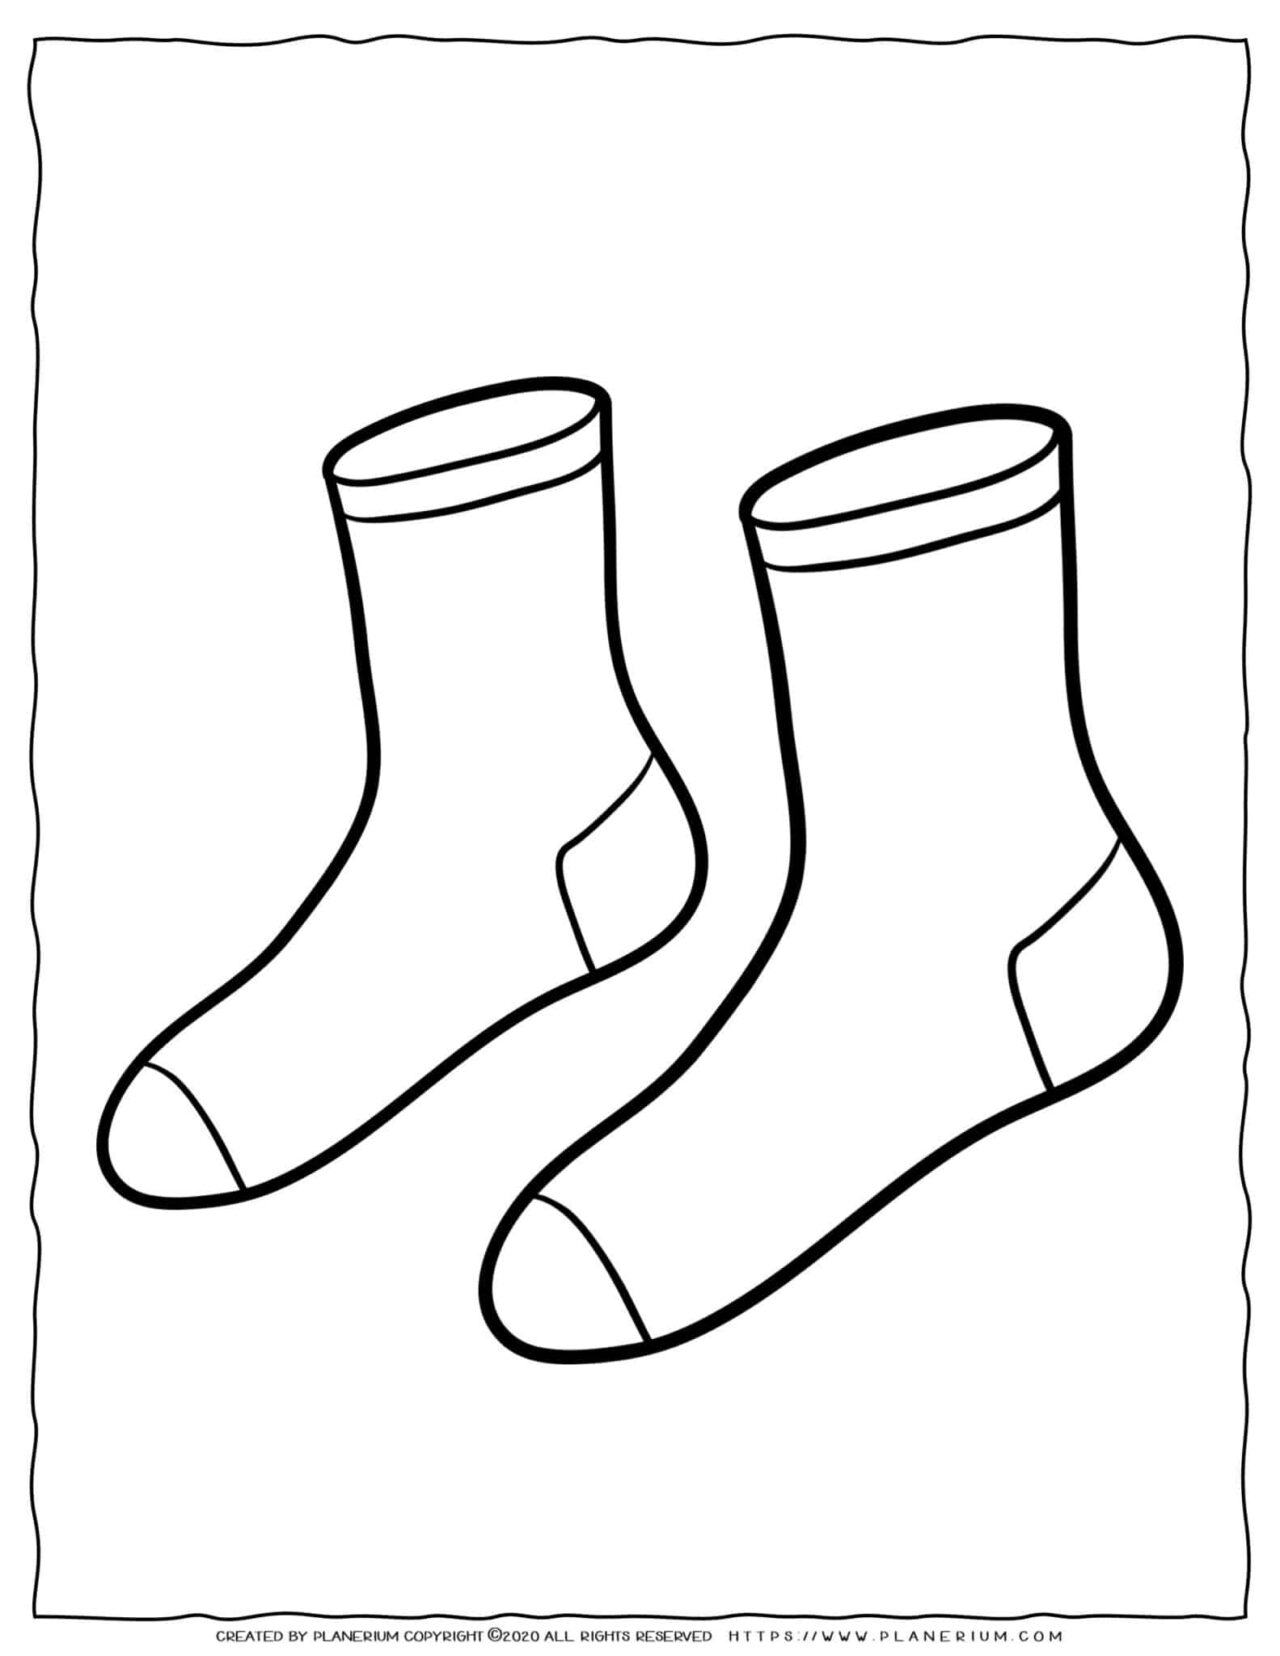 Clothes Coloring Page - Socks | Planerium